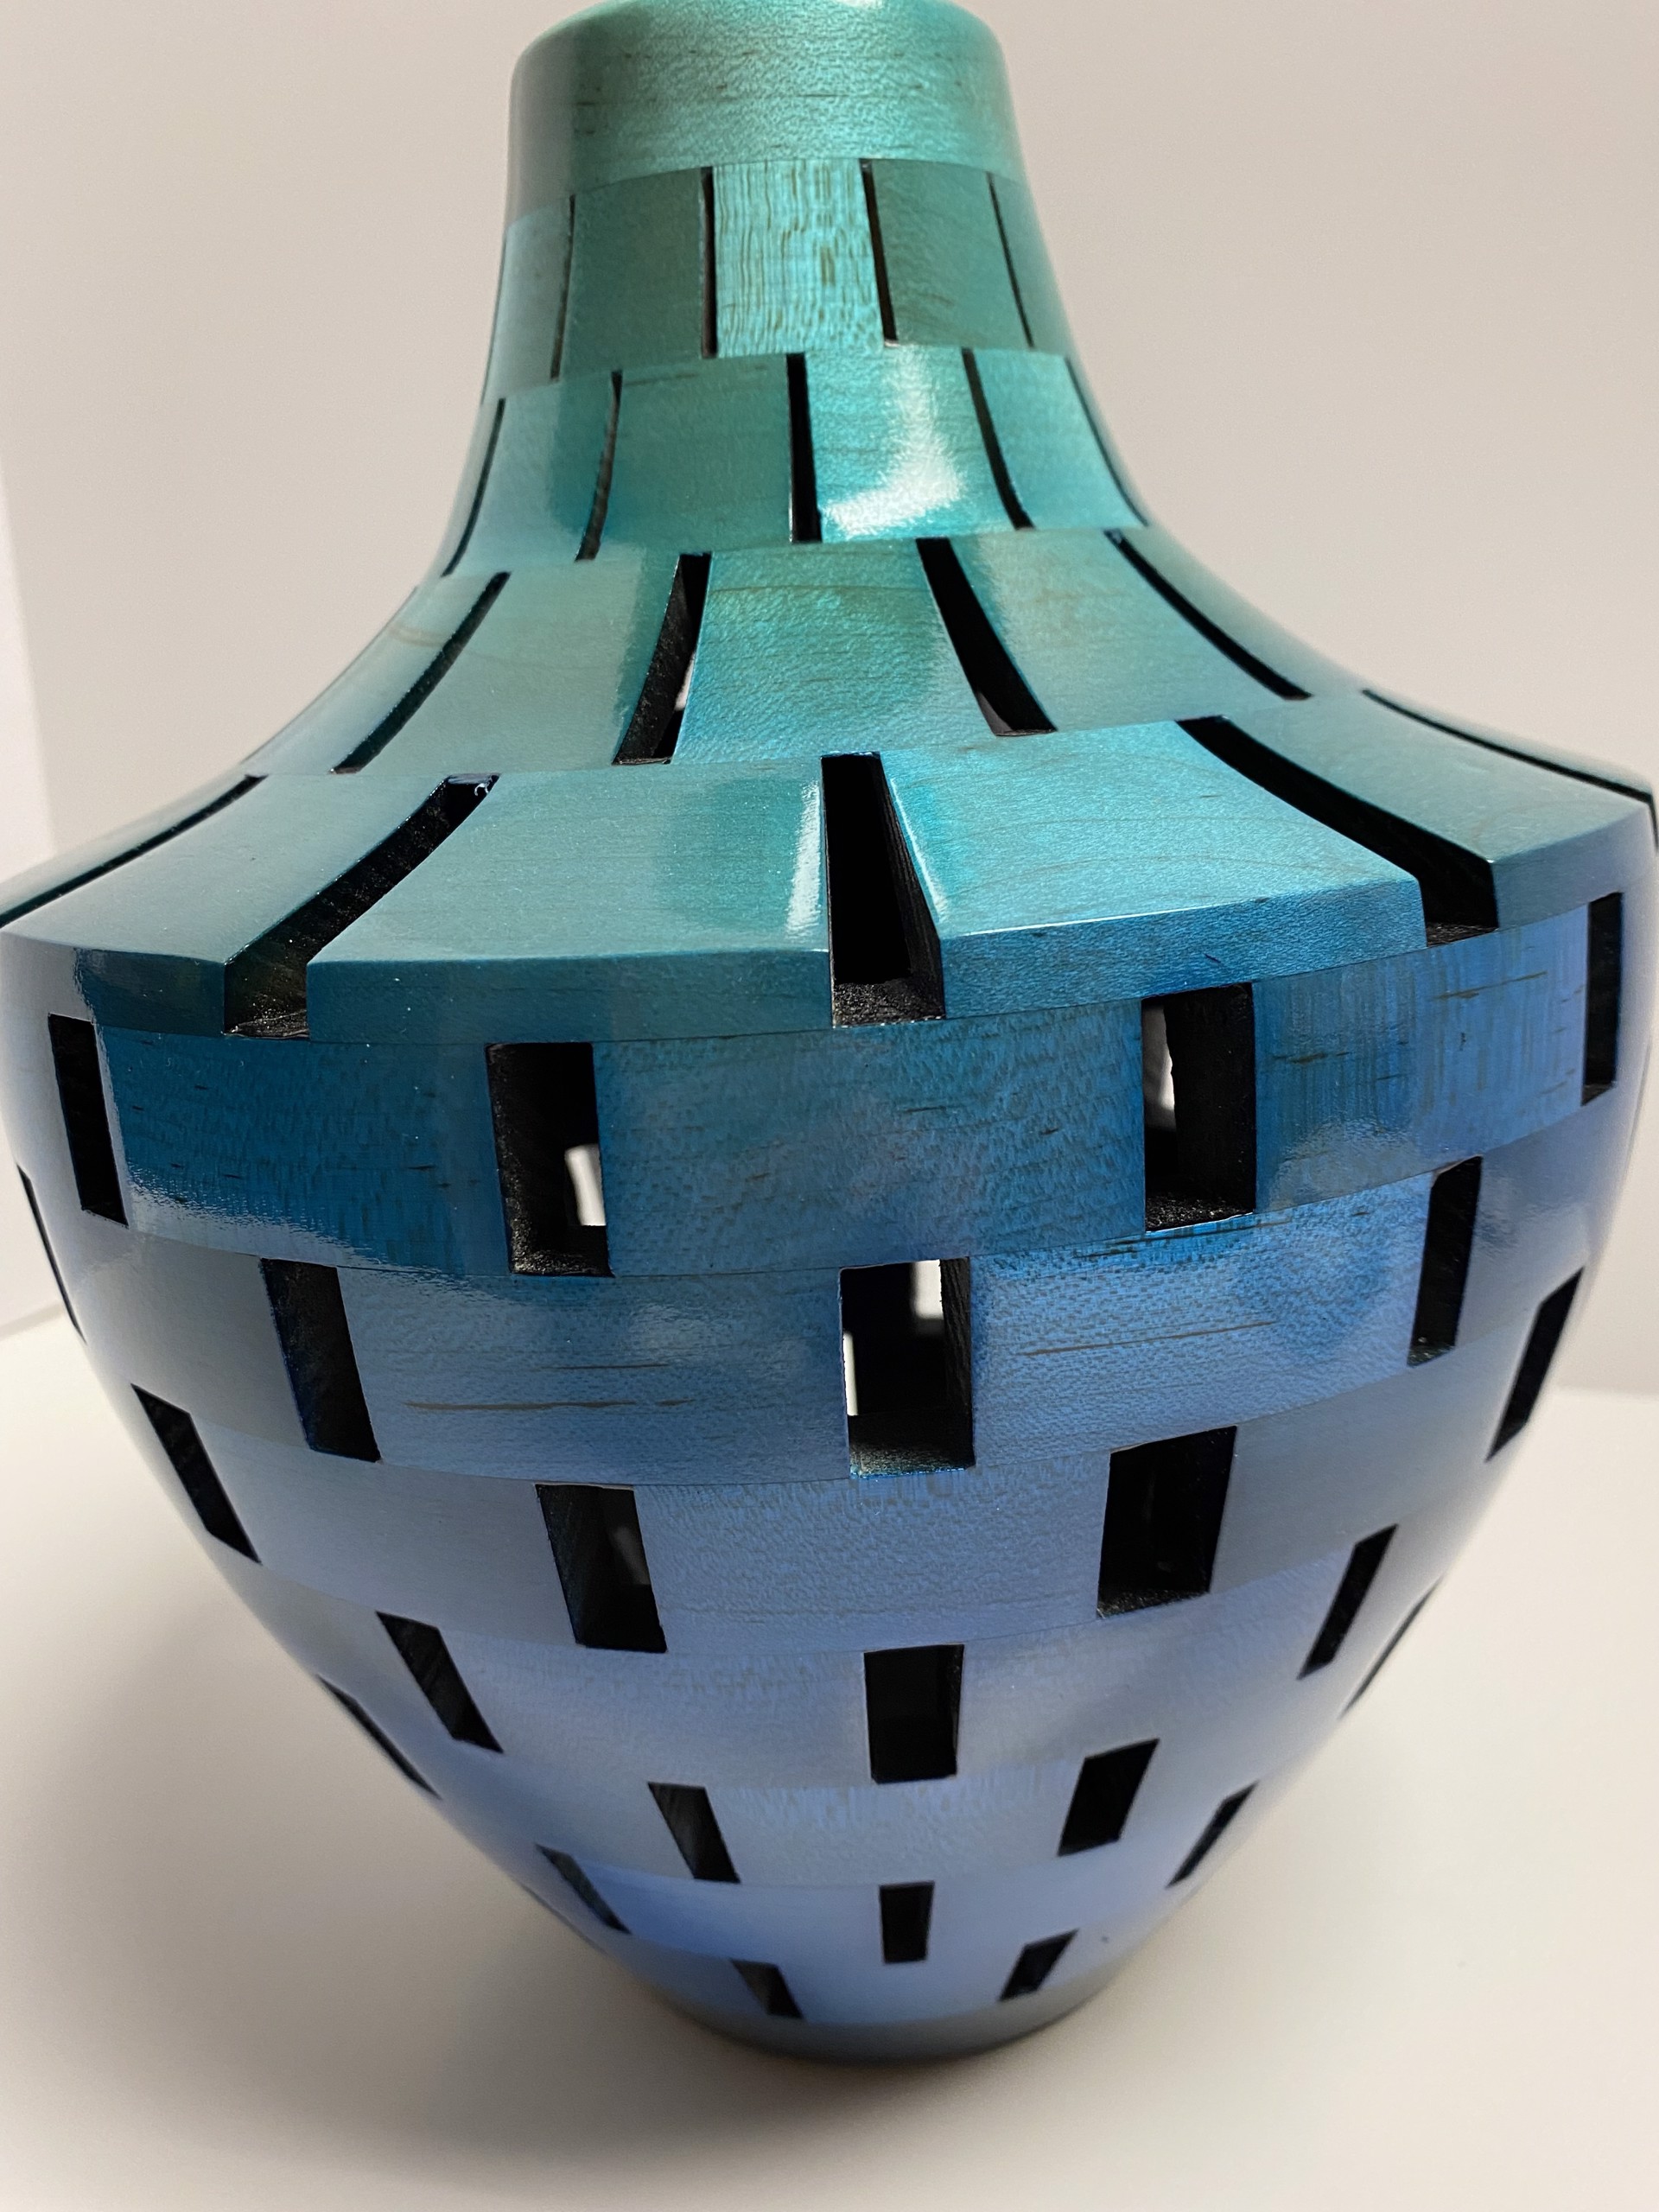 OS Vase (Turquoise/blue) by Joel Hunnicutt